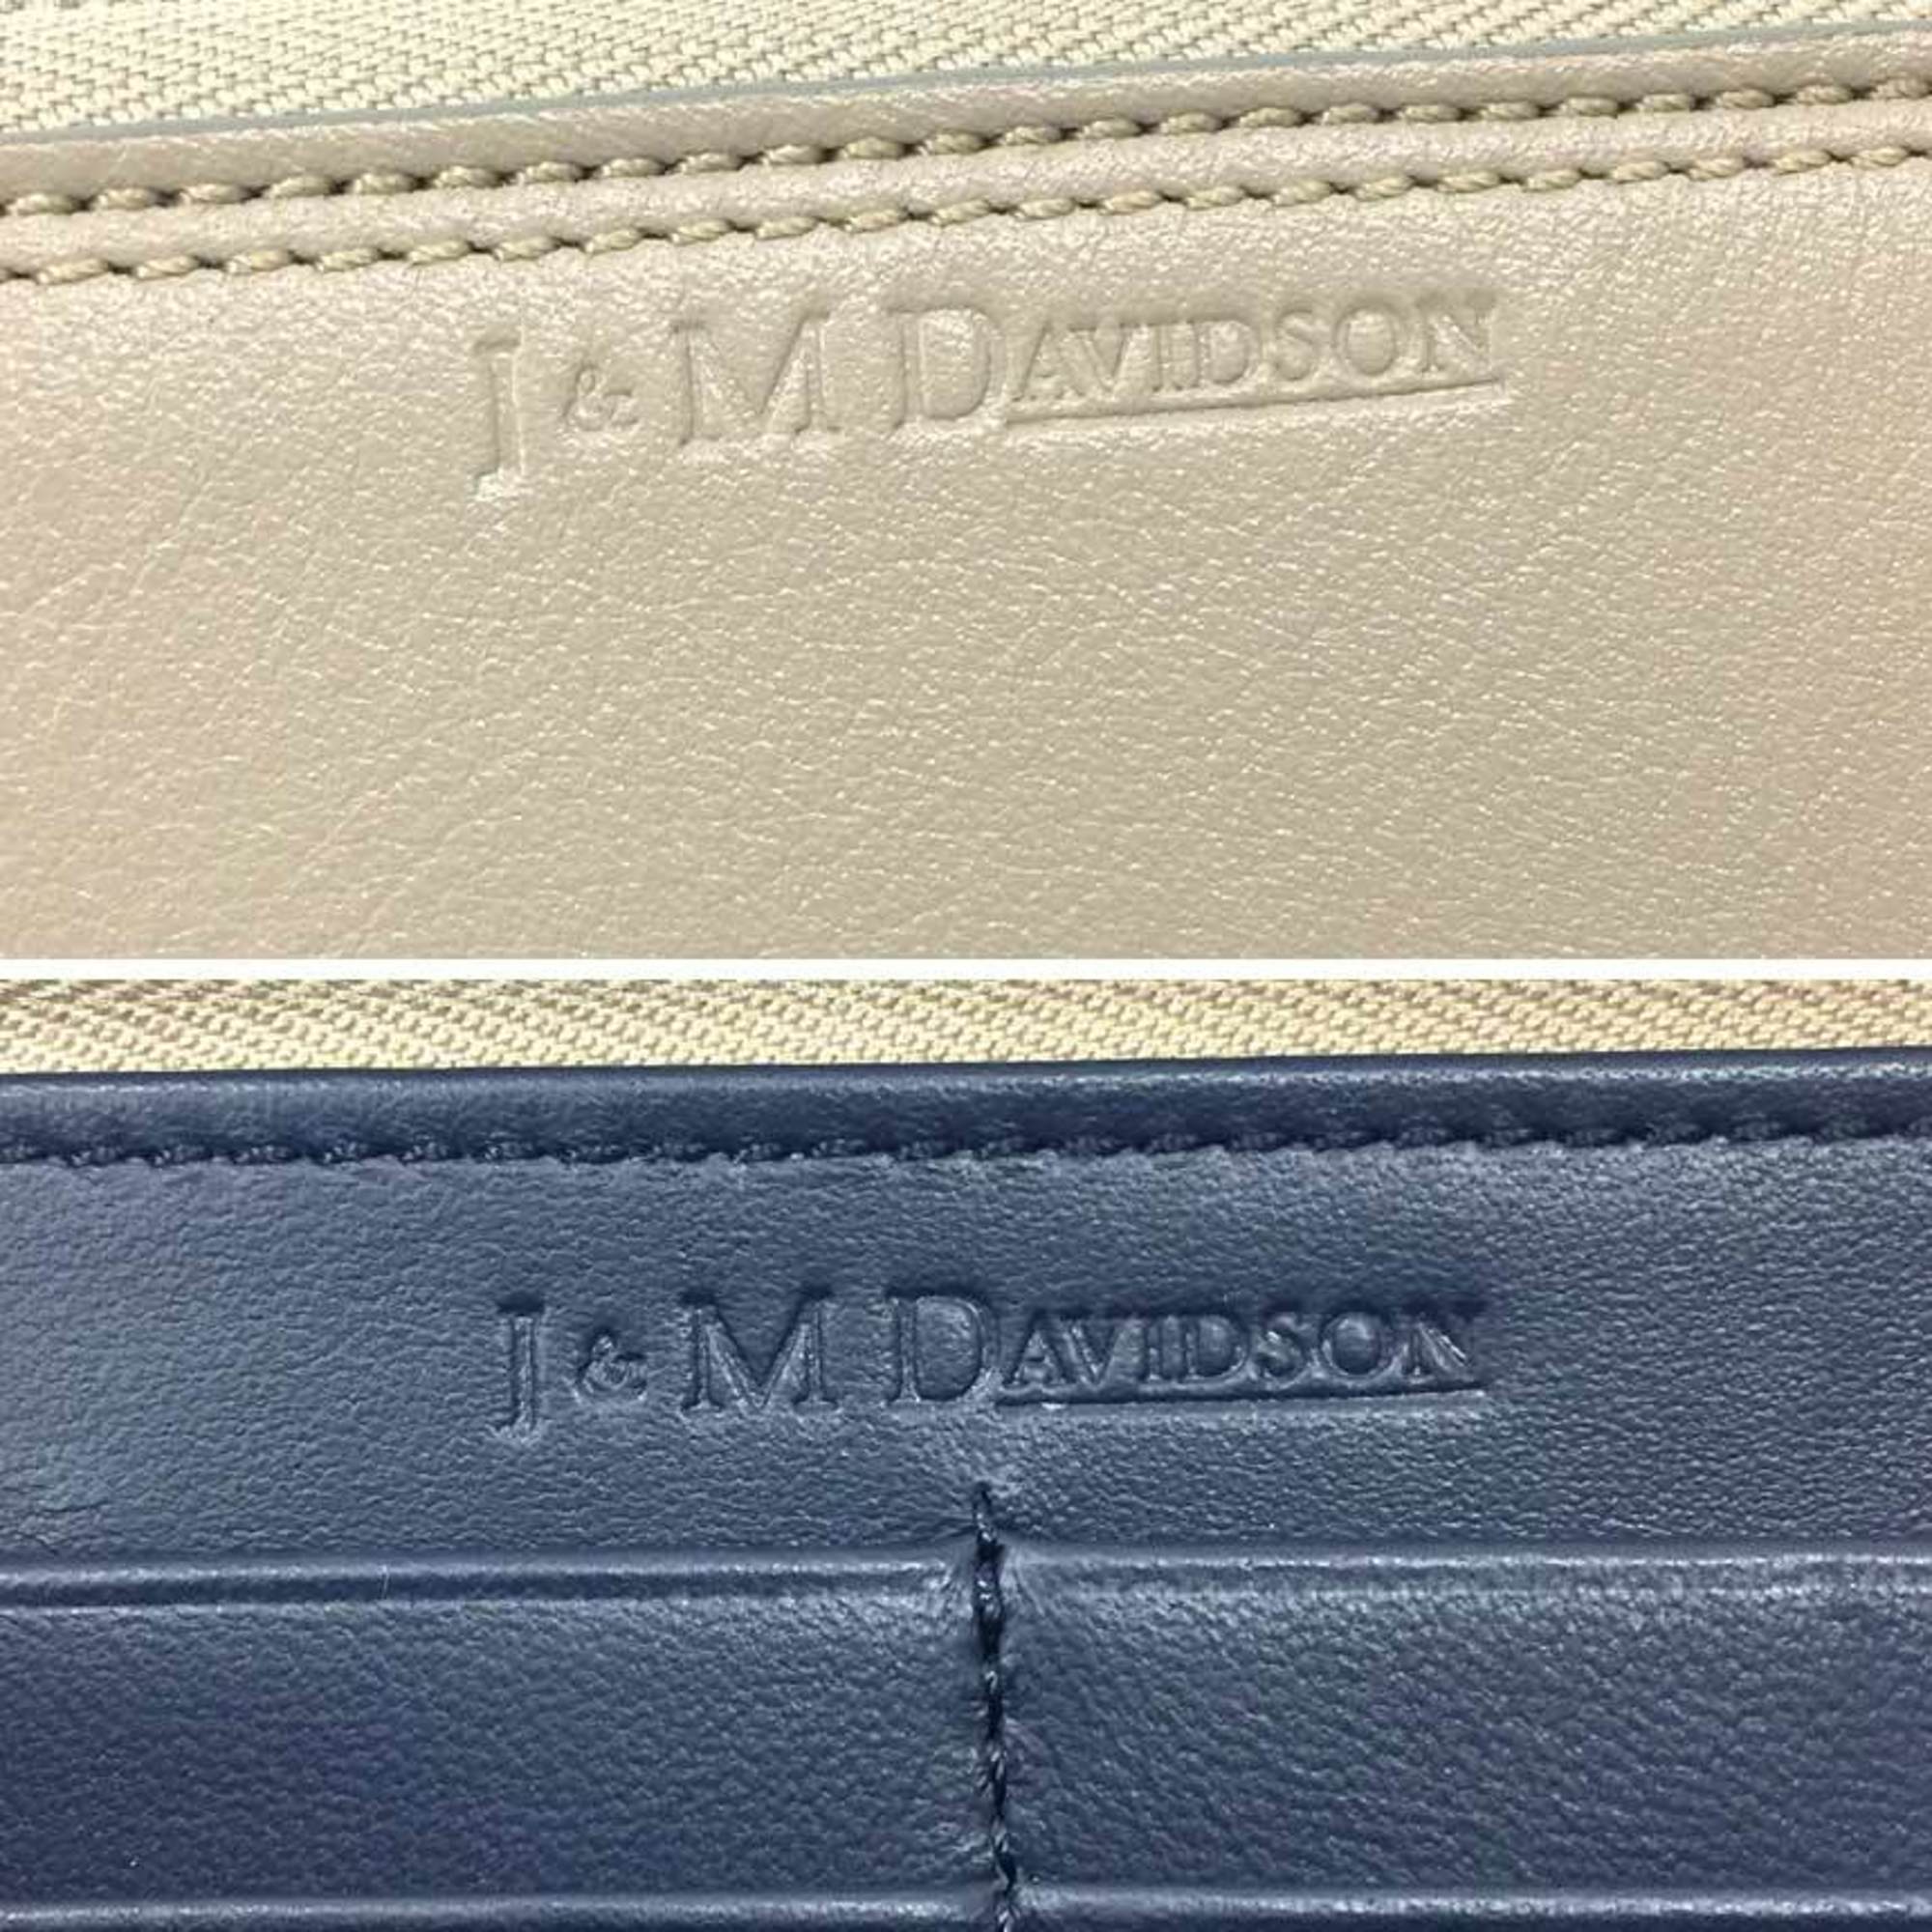 J&M DAVIDSON Davidson Long Wallet Leather Men's Women's Unisex Zip Around SZAW 0XX SCXXMBB